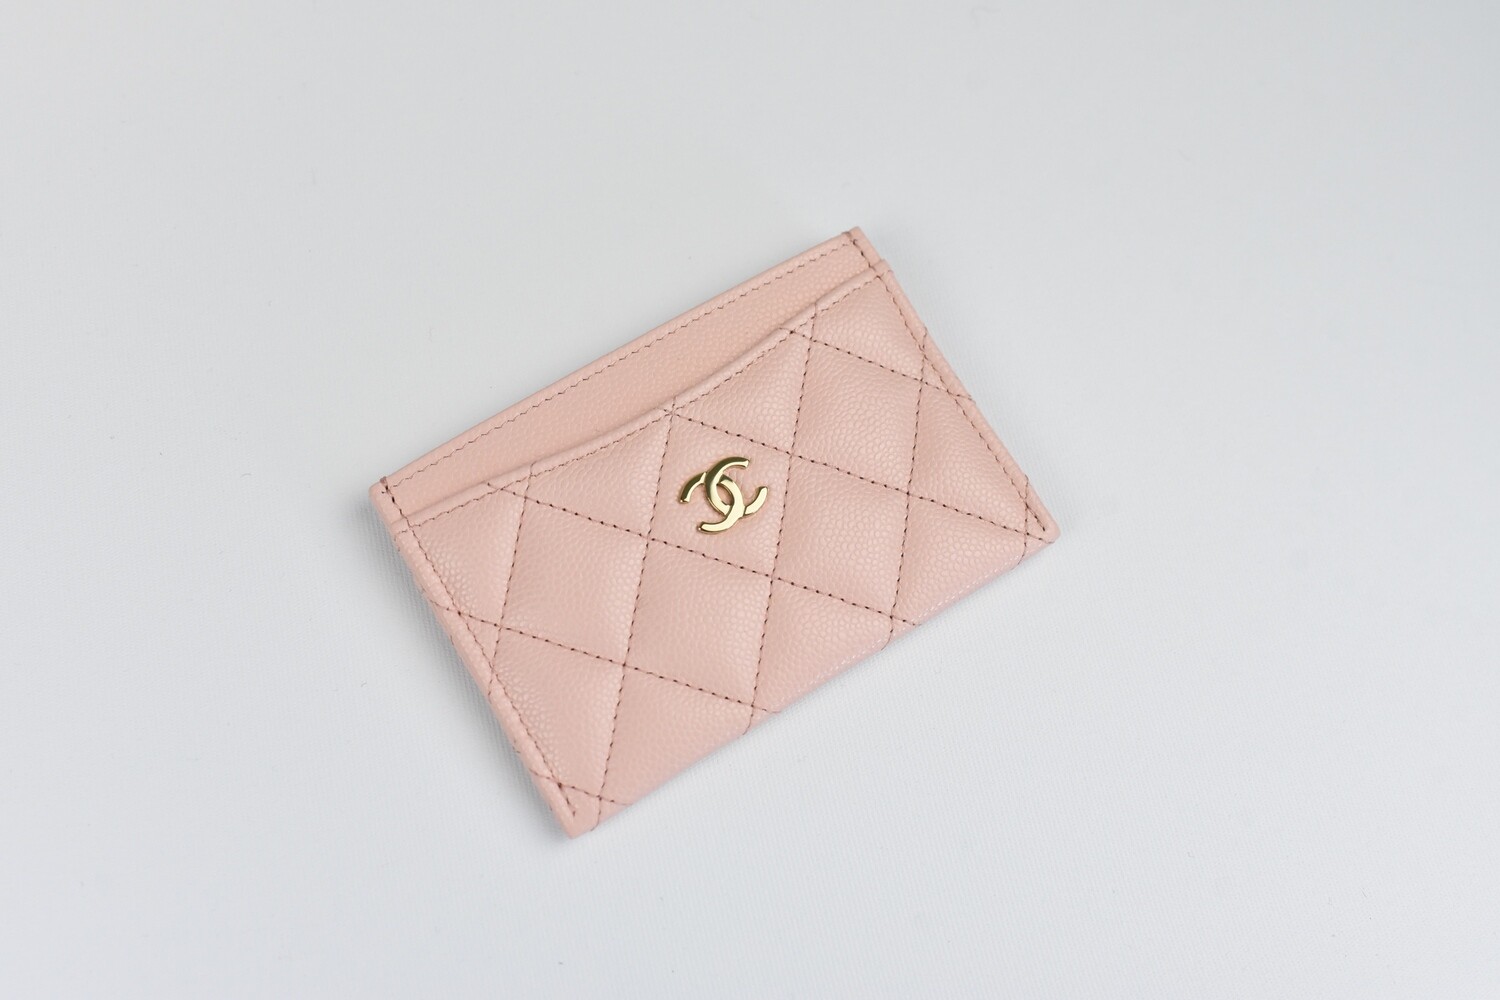 Chanel SLG Flat Cardholder, Pink Caviar with Gold Hardware, New in Box  GA003 - Julia Rose Boston